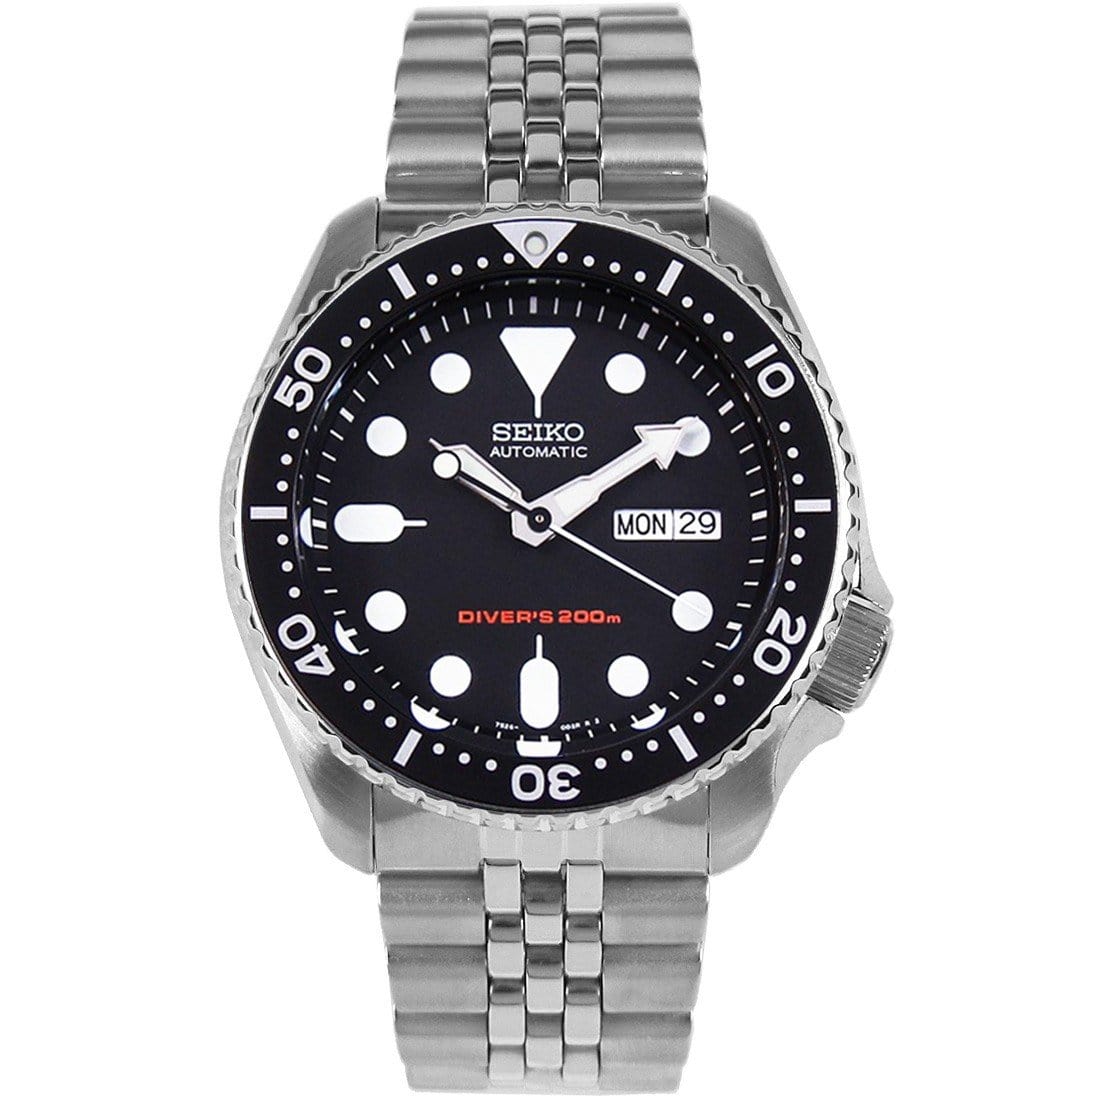 SKX007K2 SKX007 Seiko Automatic Analog Male Divers Watch with Extra Bracelet